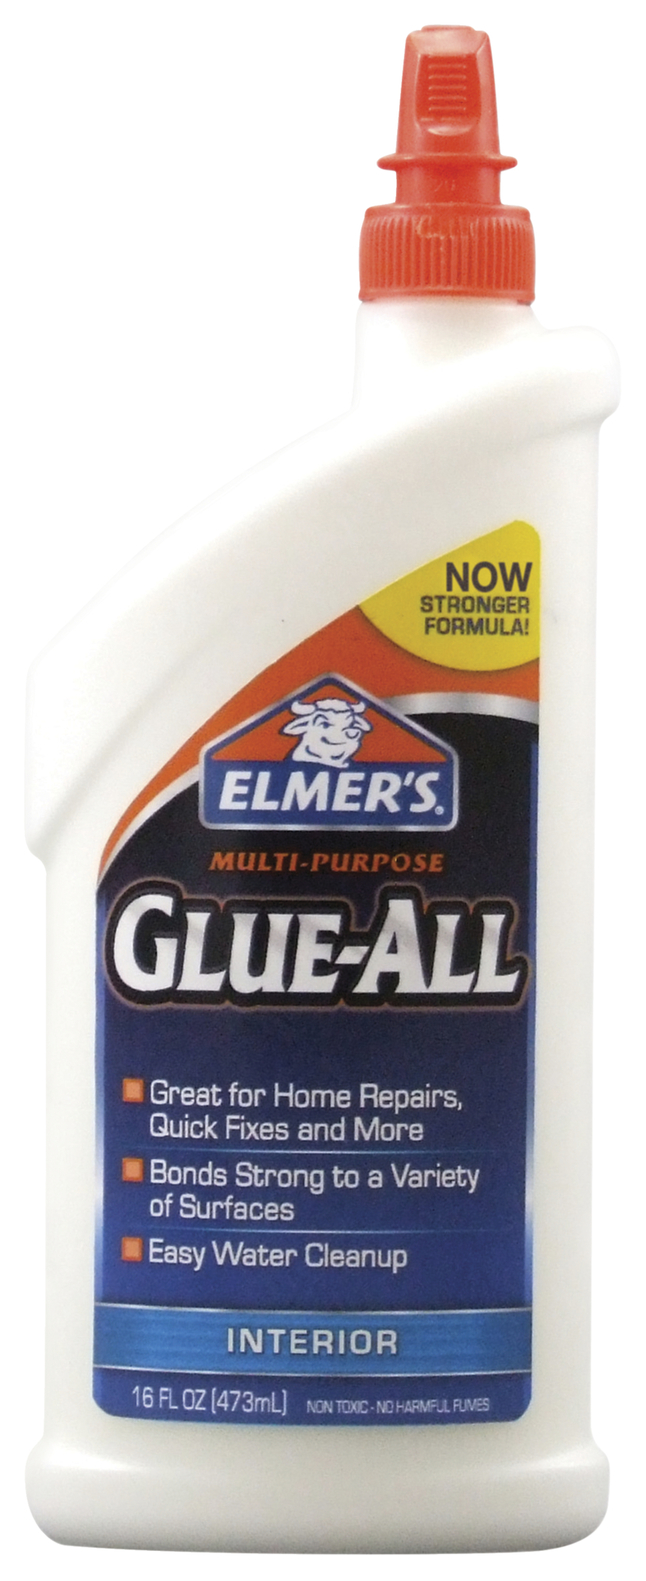 Elmer's Glue-All, White